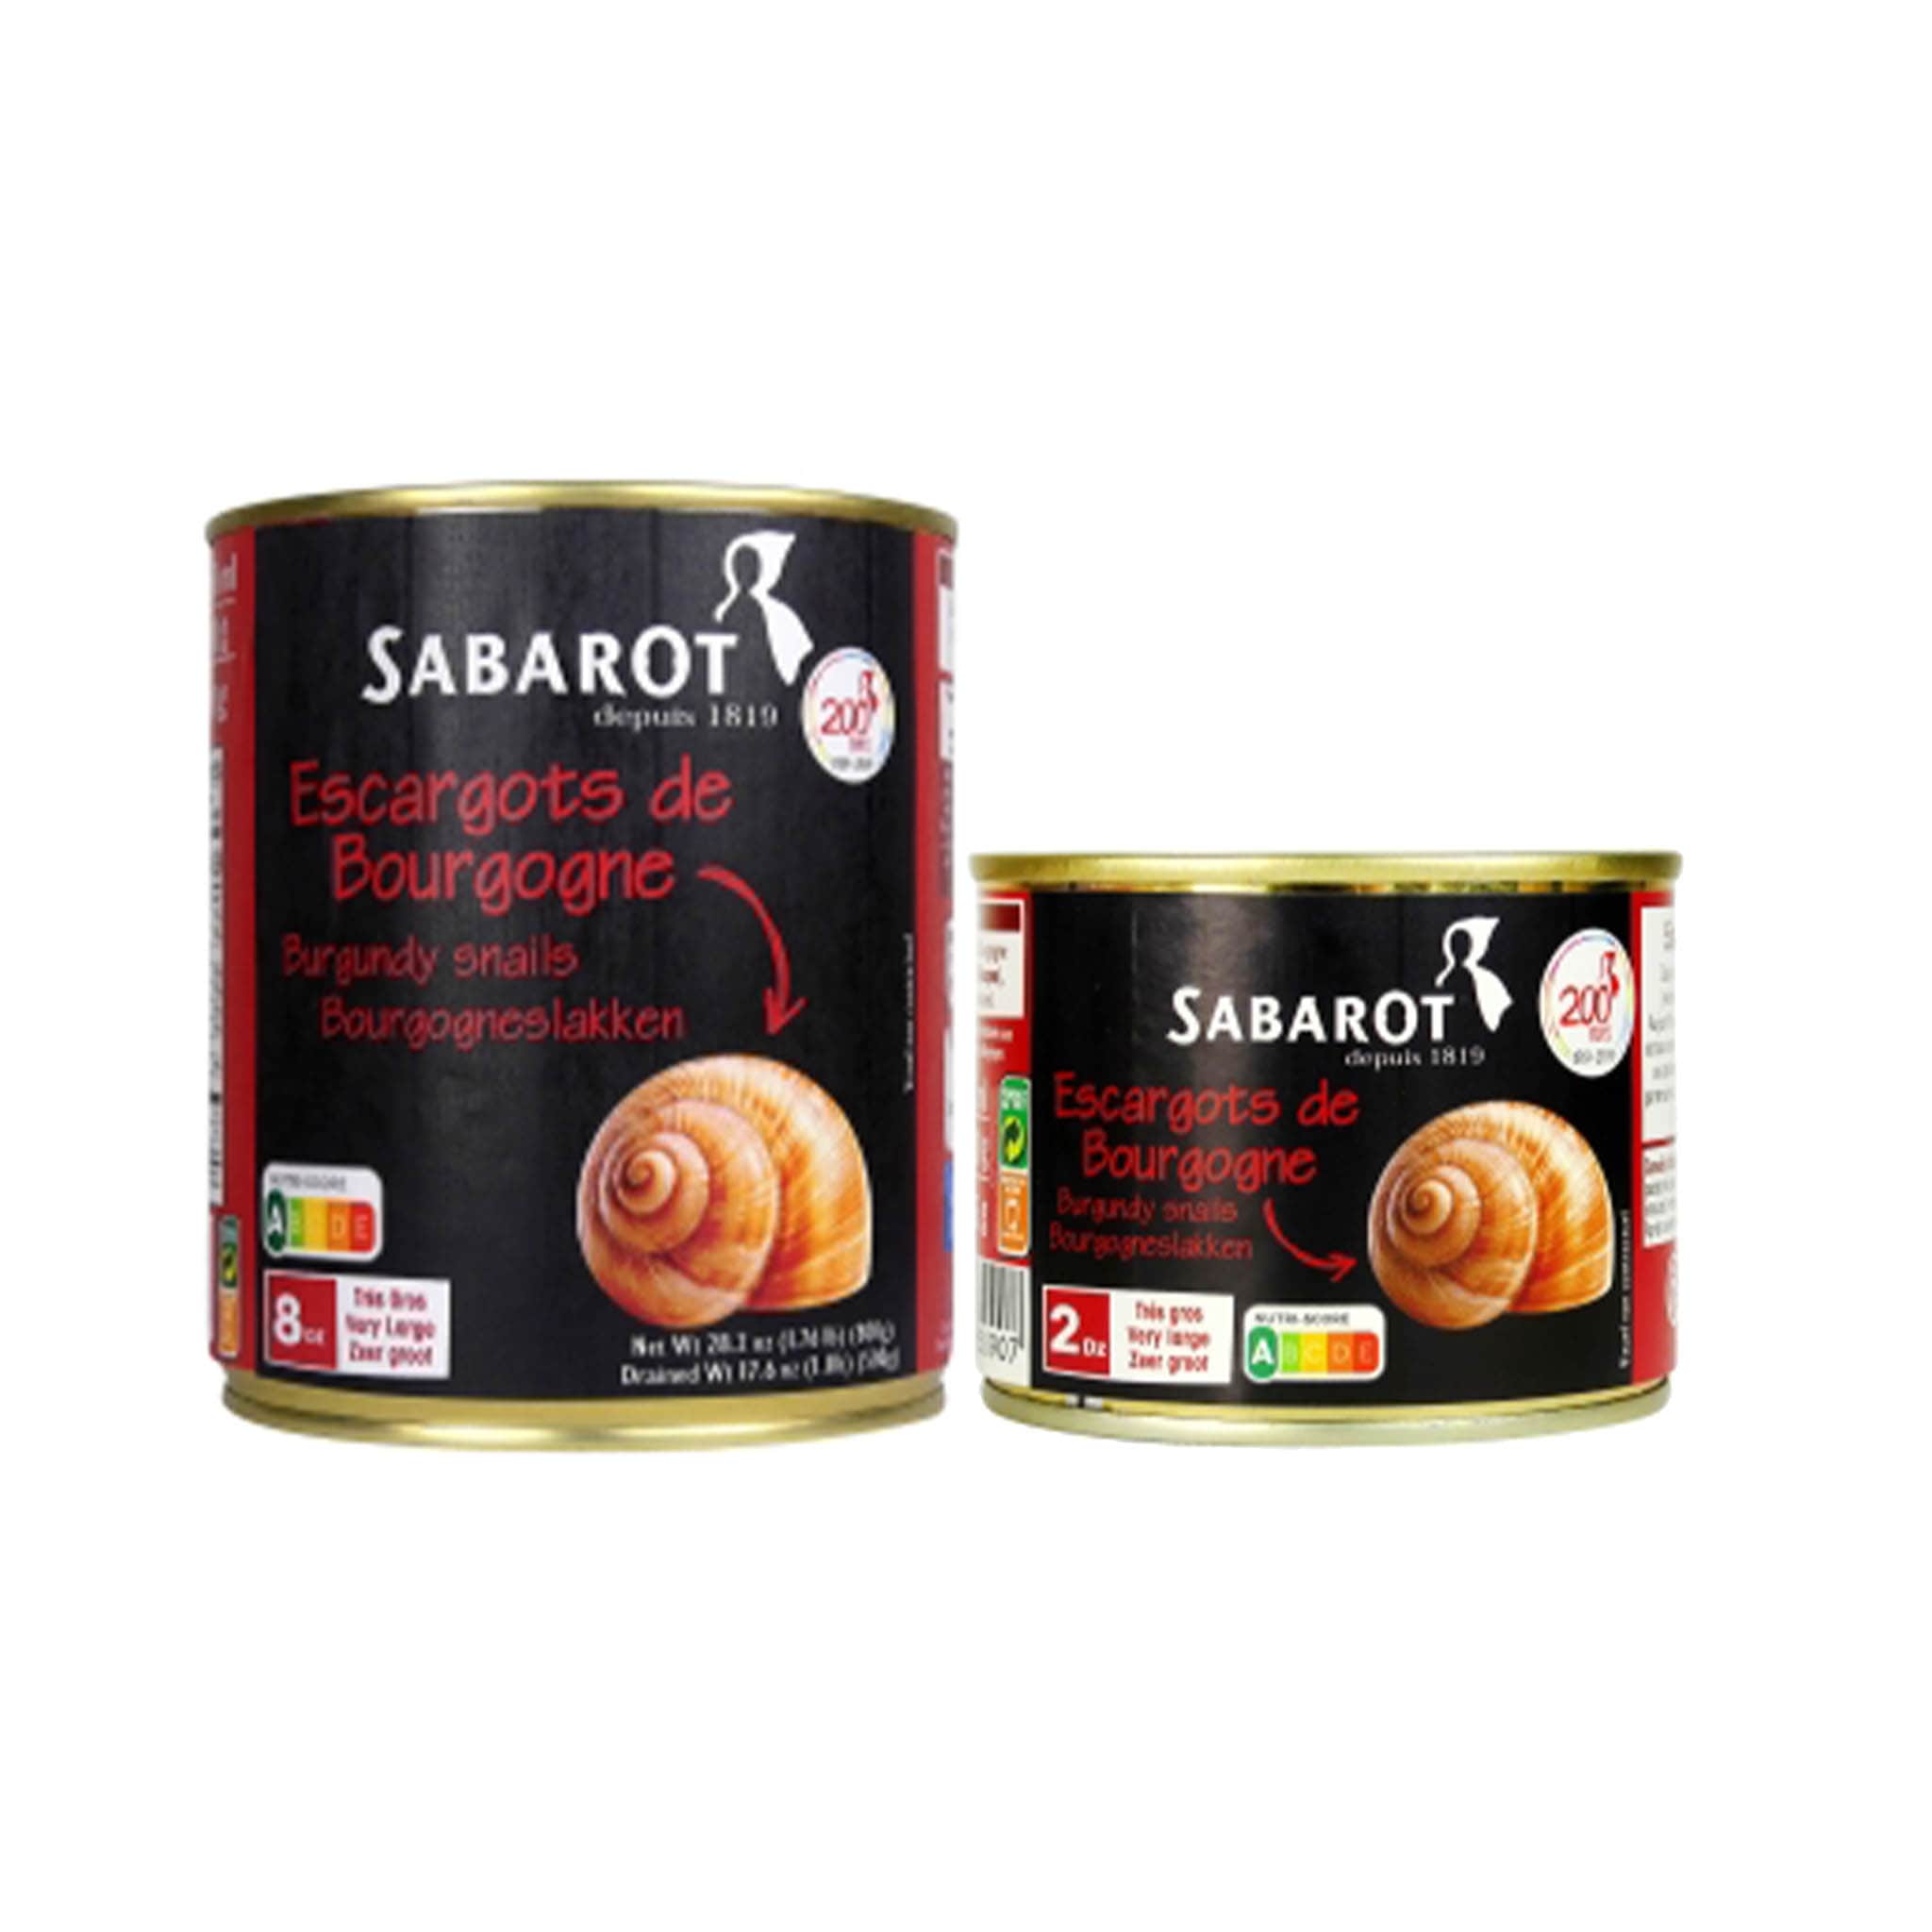 Sabarot Extra Large Burgundy Snails